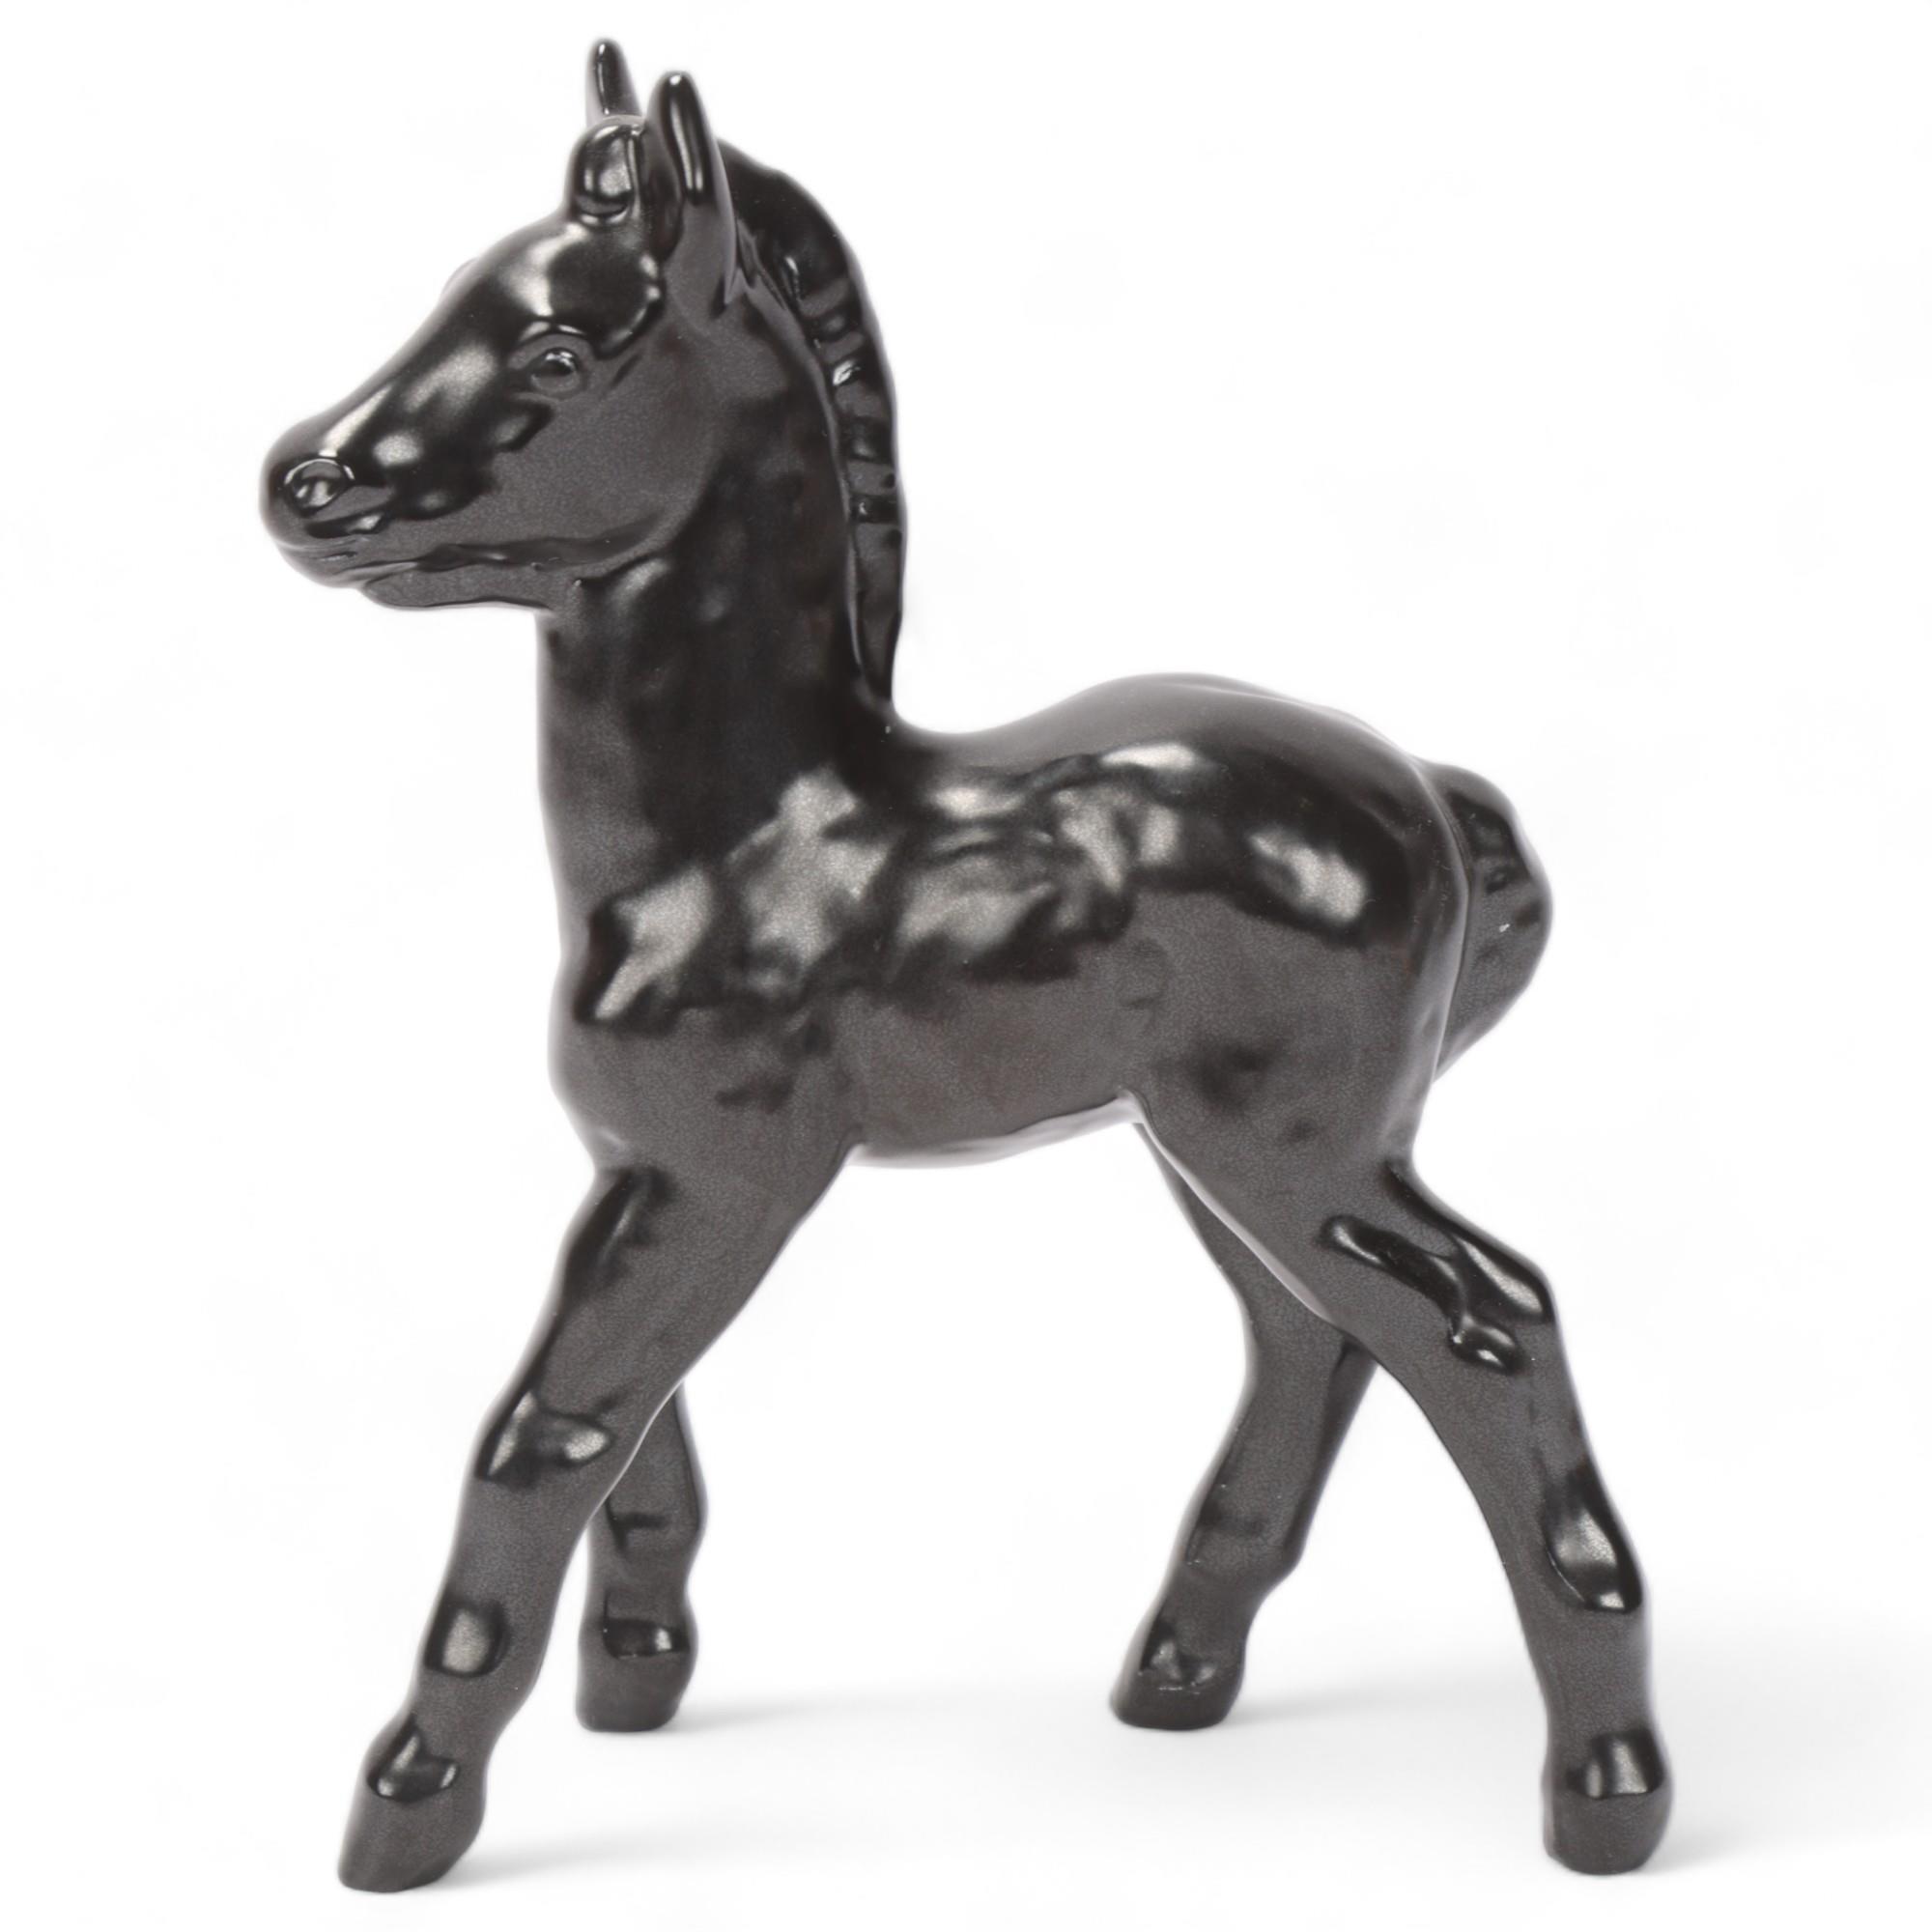 VICKE LINDSTRAND for Upsala Ekeby, Sweden, a figurine of a black foal, design nr 62 in the 1939